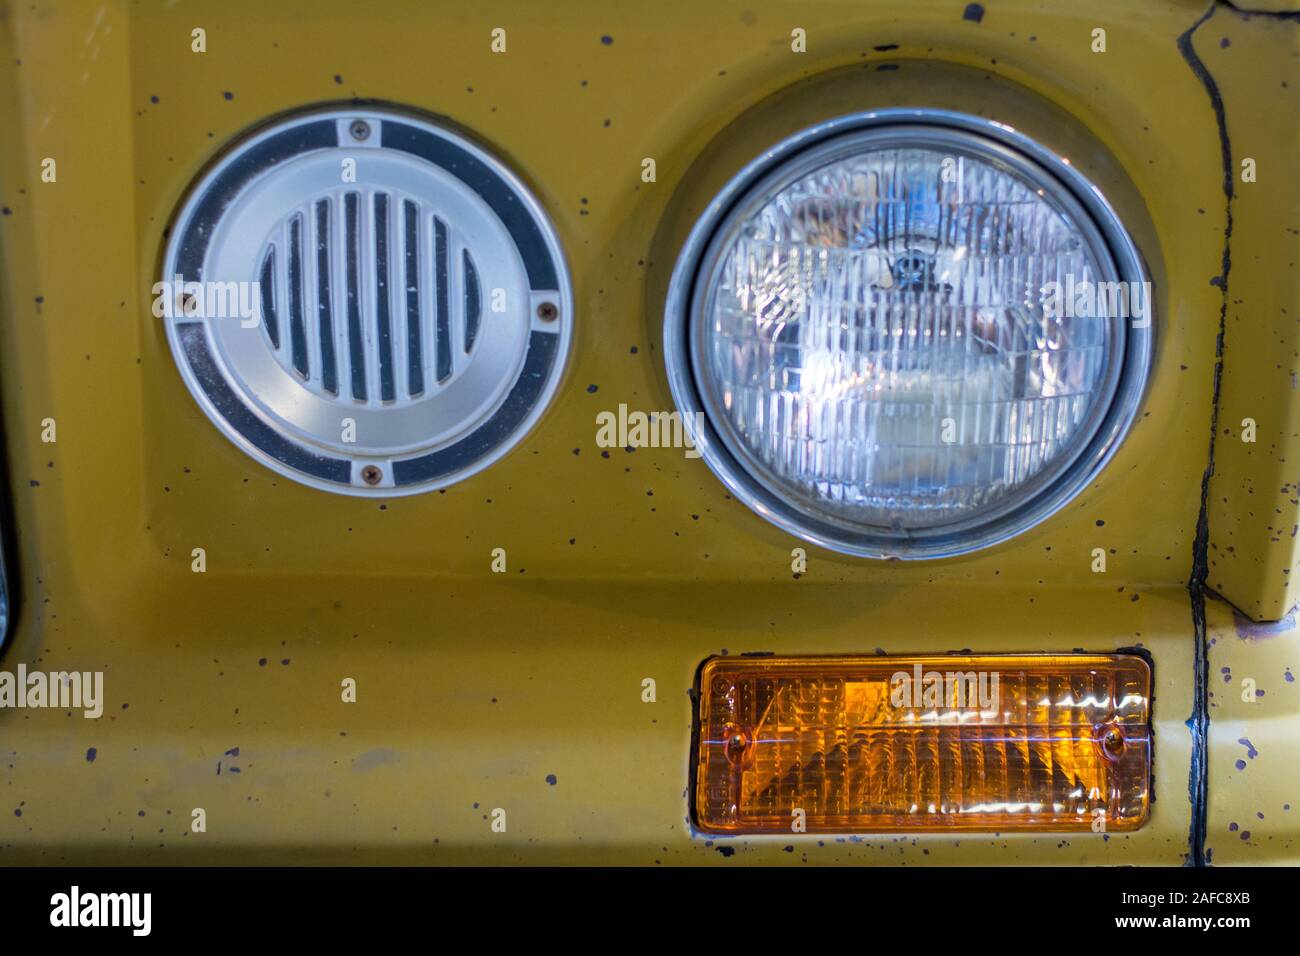 Old yellow truck vintage headlights blinker Stock Photo